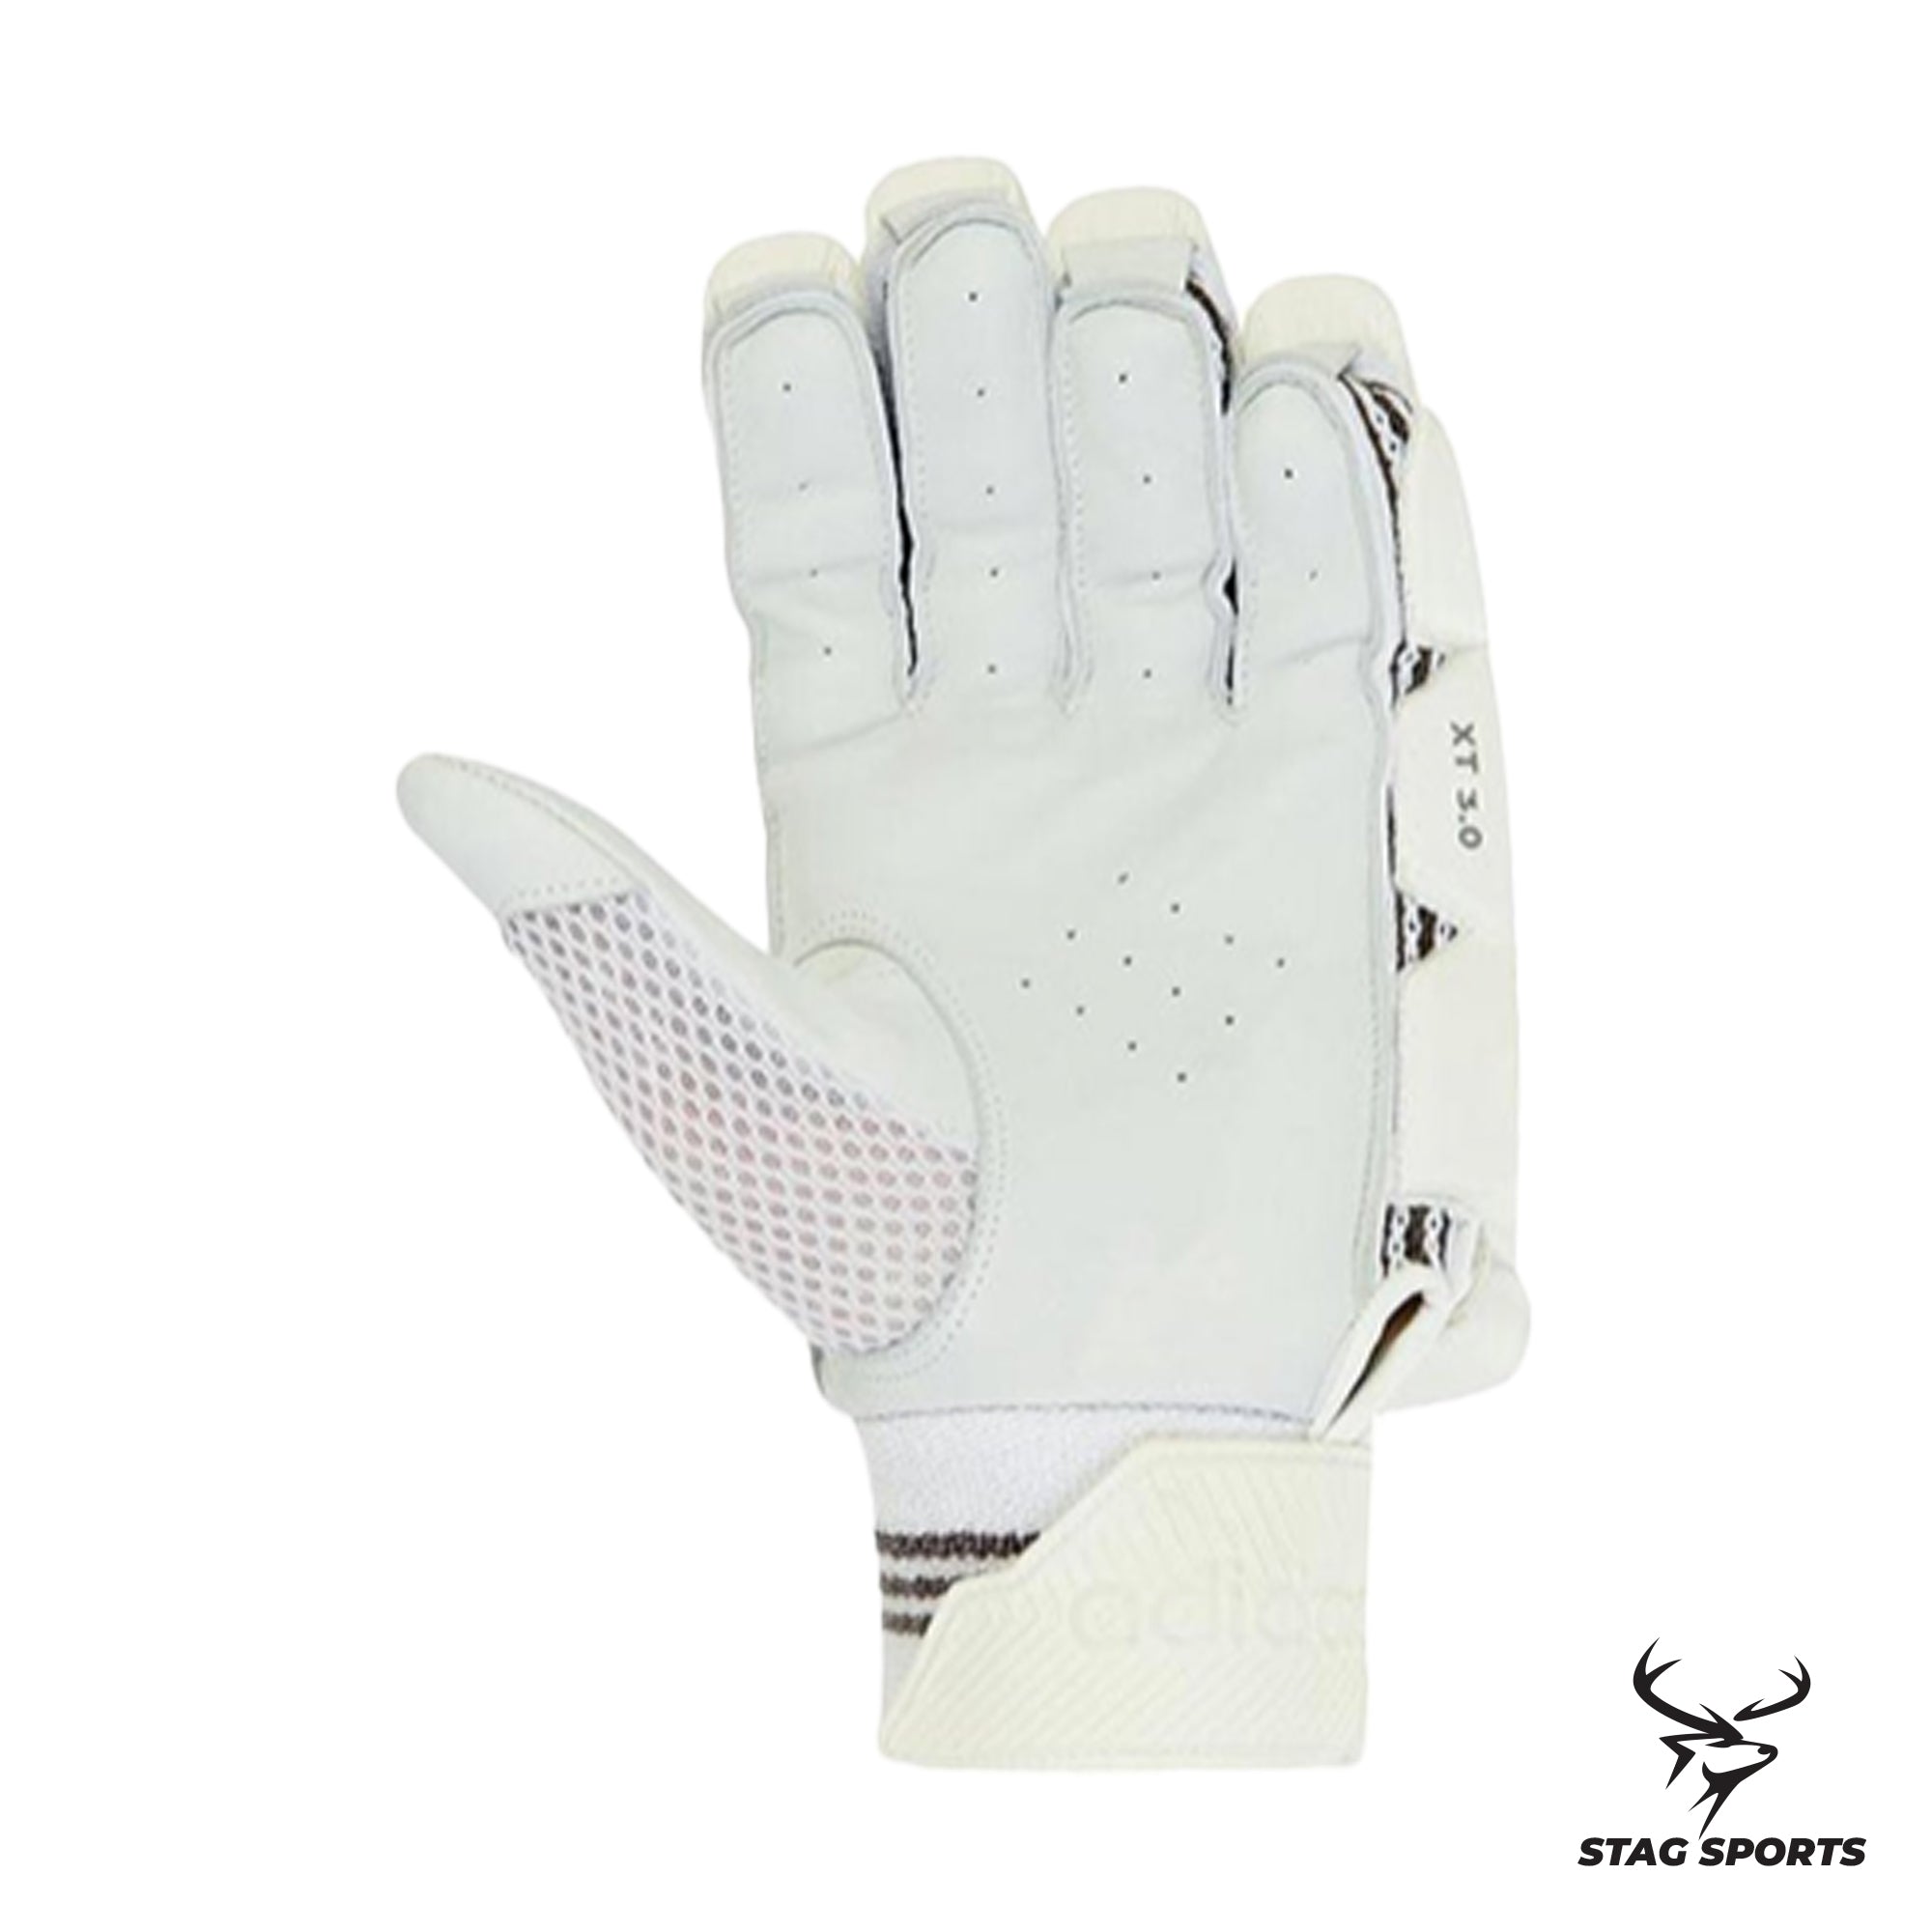 Adidas XT 3.0 Cricket Batting Gloves